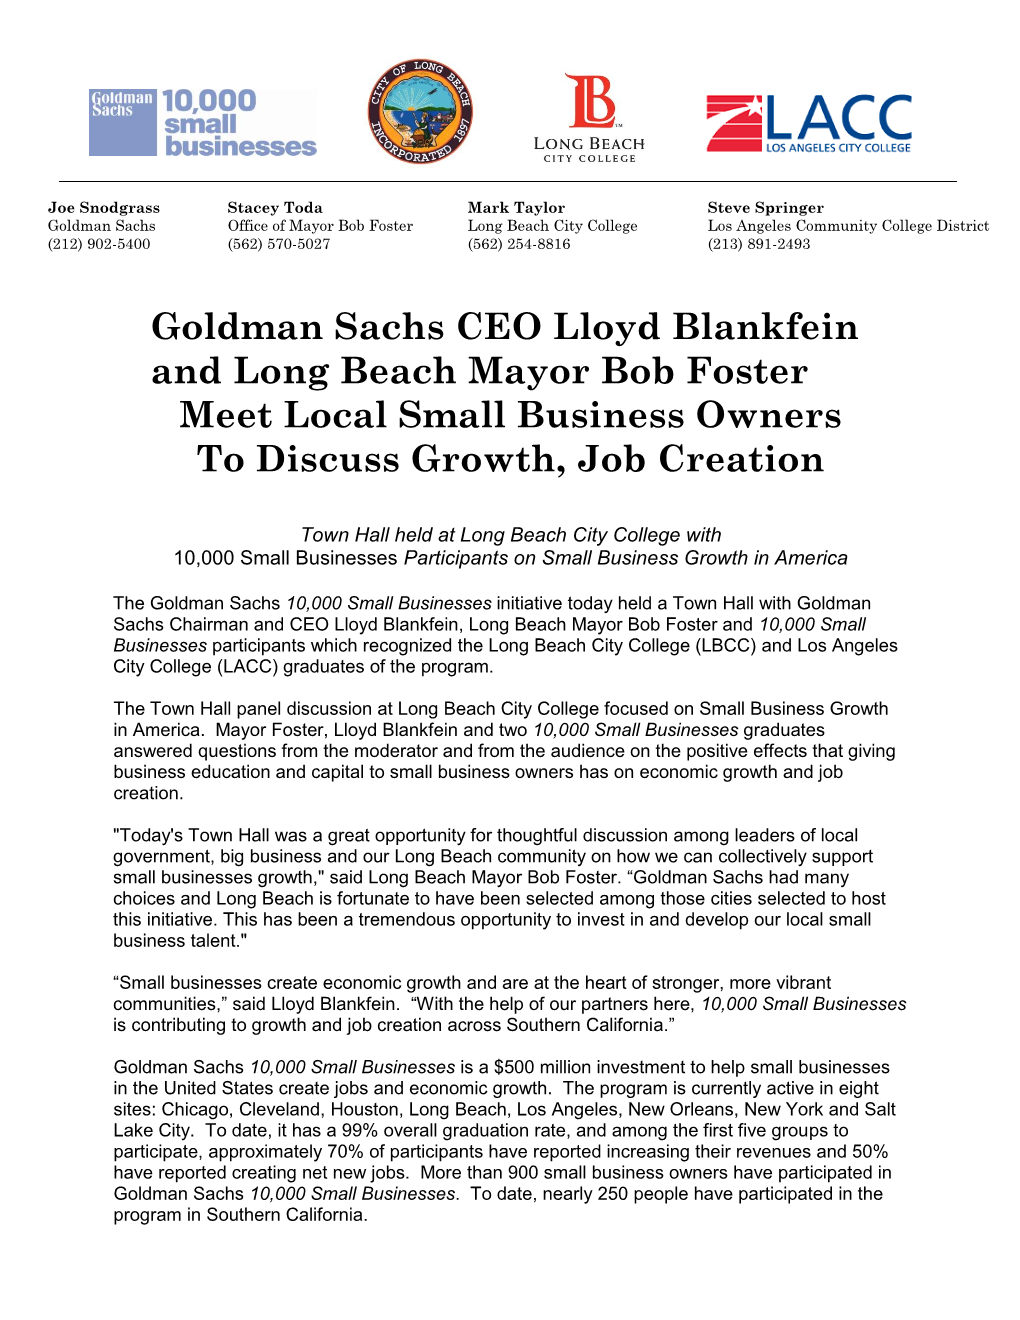 Goldman Sachs CEO Lloyd Blankfein and Long Beach Mayor Bob Foster